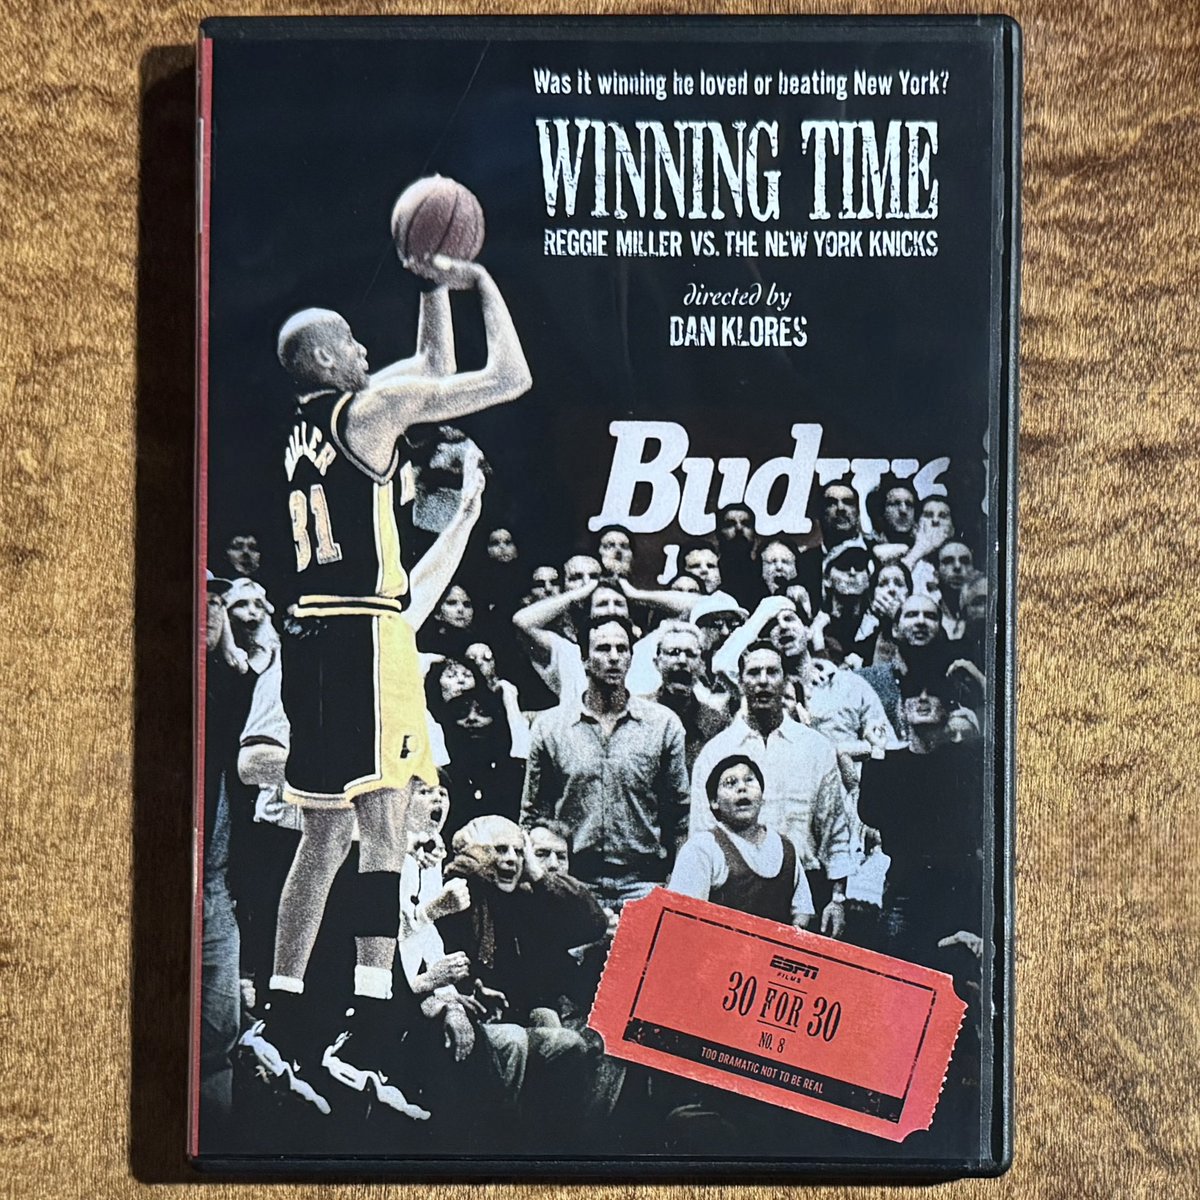 Winning Time: Reggie Miller vs. the New York Knicks (2010) • #winningtimereggiemillervsthenewyorkknicks #reggiemiller #newyorkknicks #spikelee #danklores #moviecollection #dvdcollection #whatimwatching